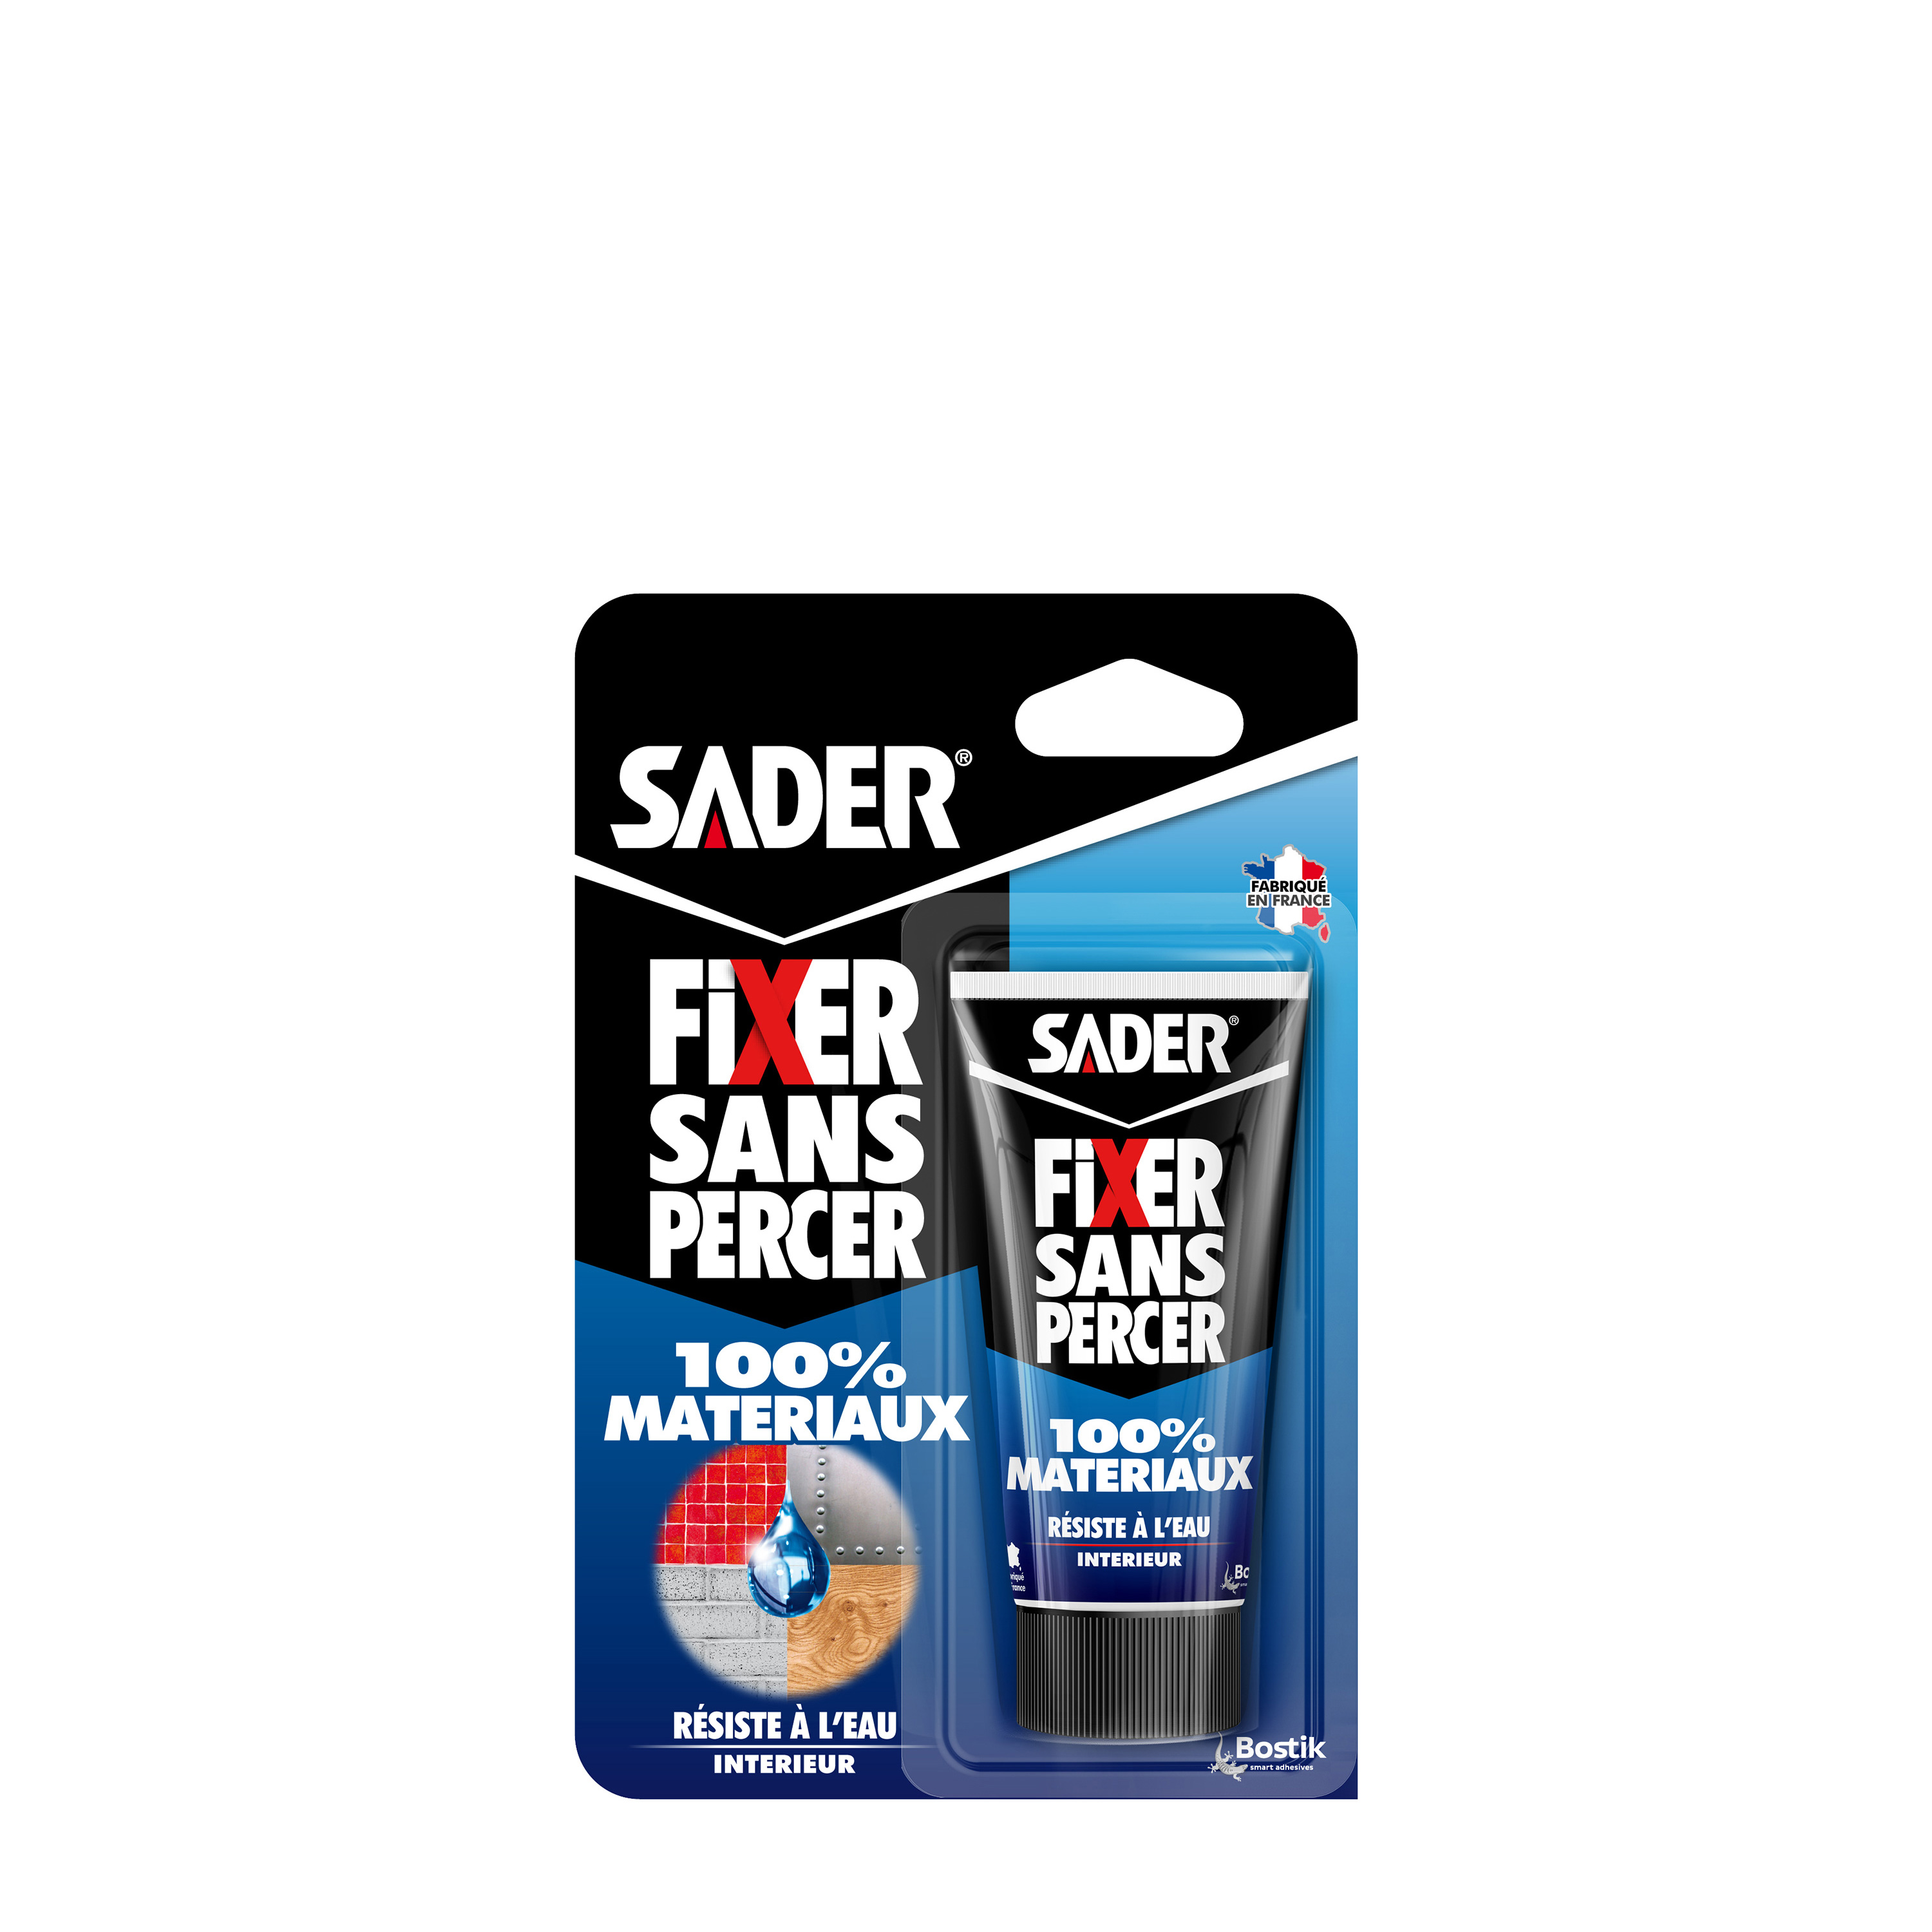 Sader Fixer Sans Percer 100% Matériaux Blister 55ml - SADER